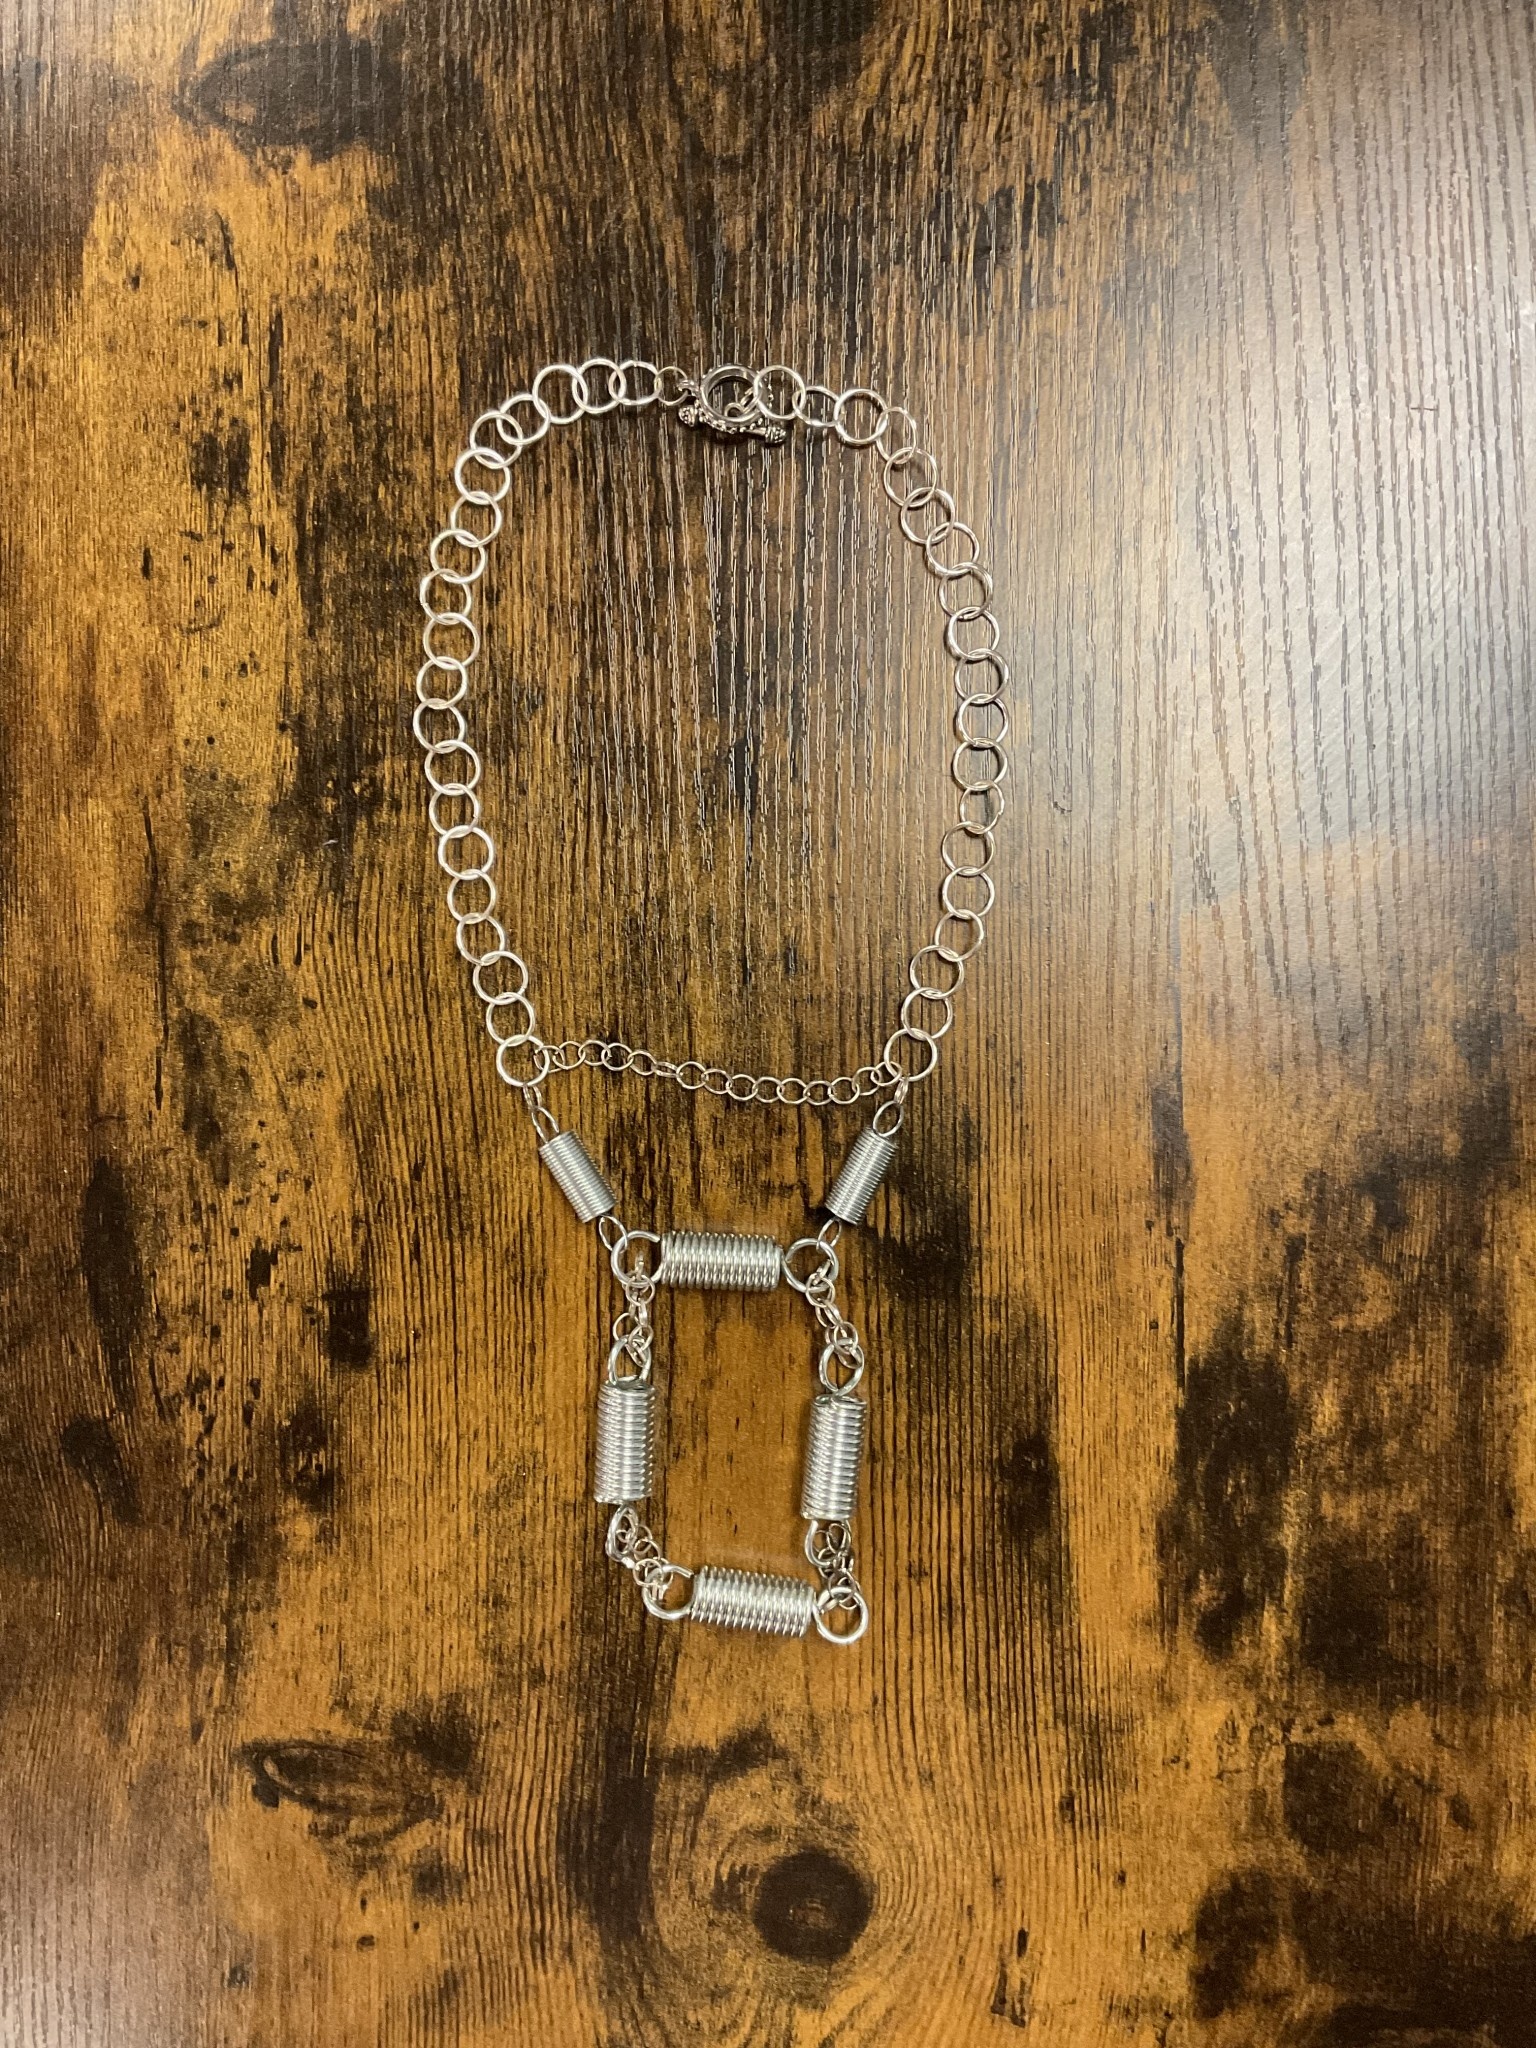 Spring Loaded handmade necklace